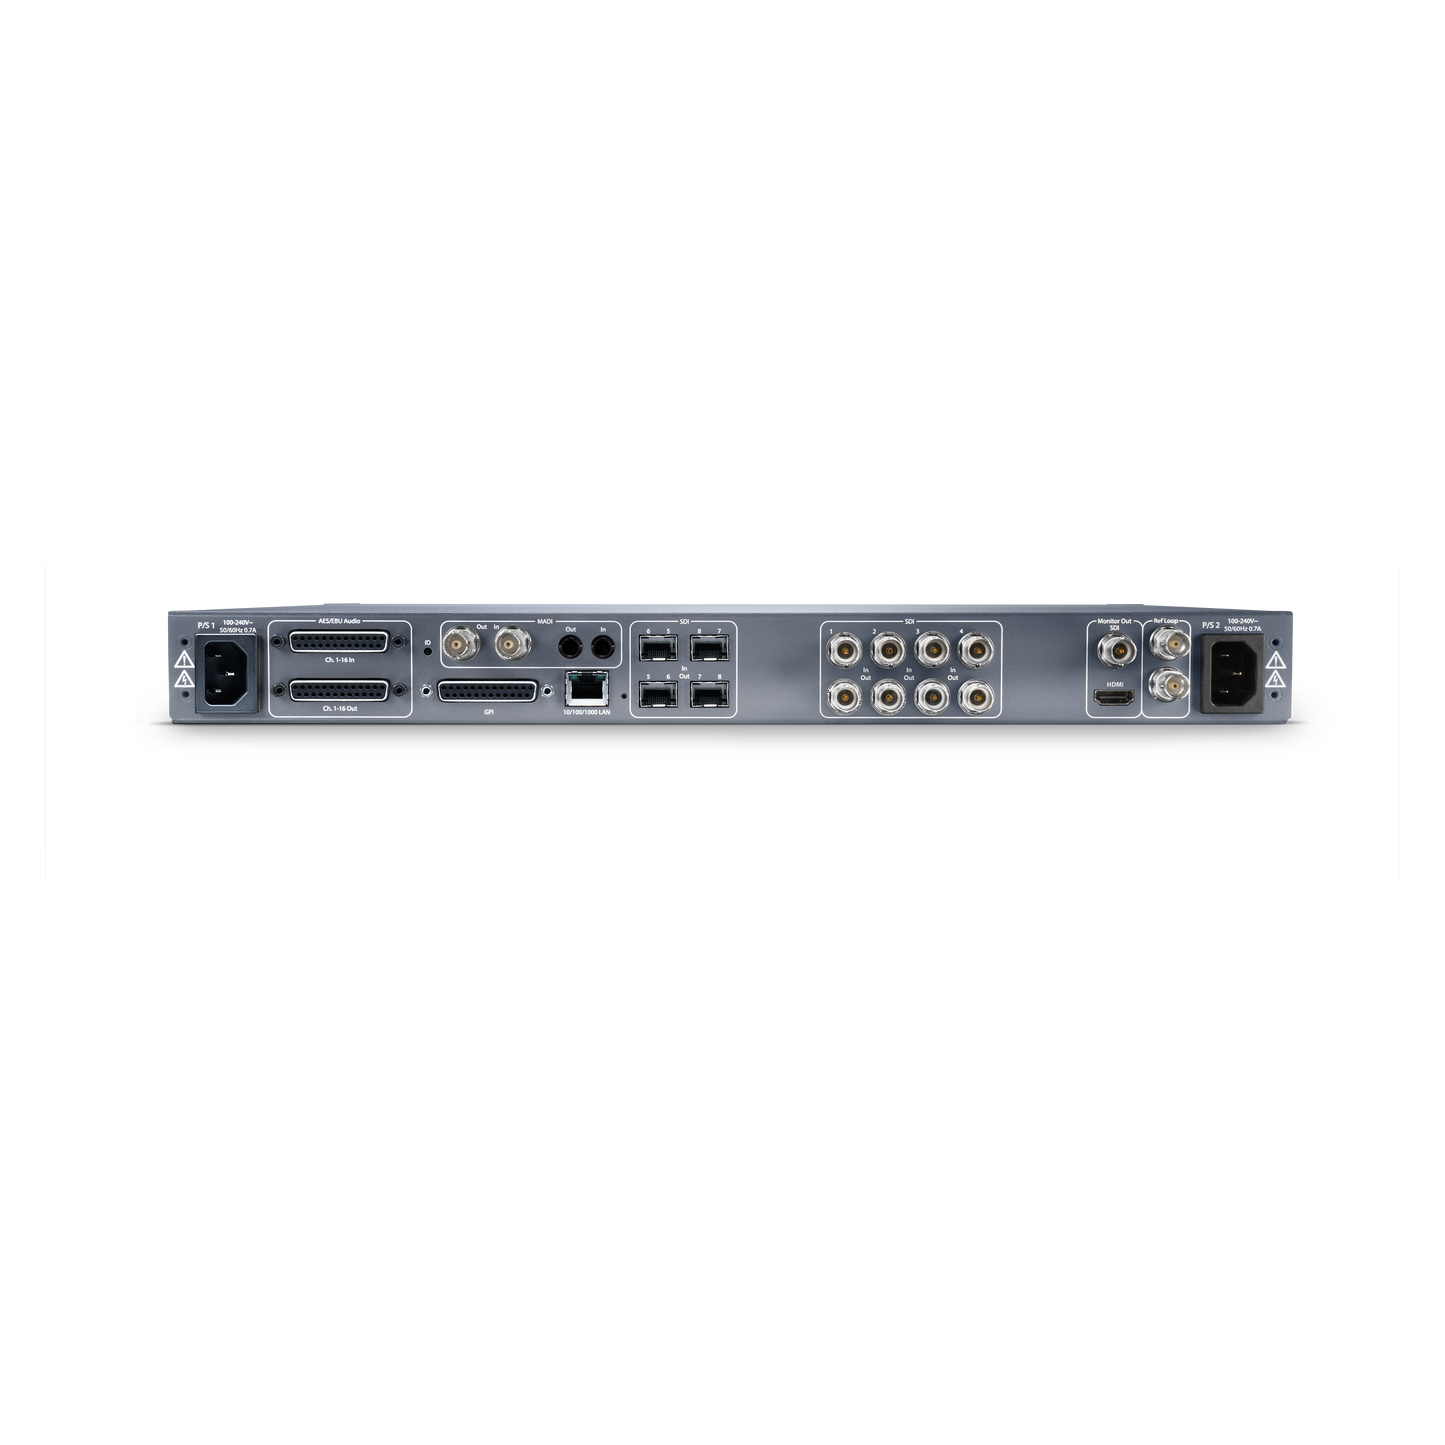 AJA FS4 4-Channel 12G-SDI/1-Channel UHD 4K Frame Synchronizer/Converter